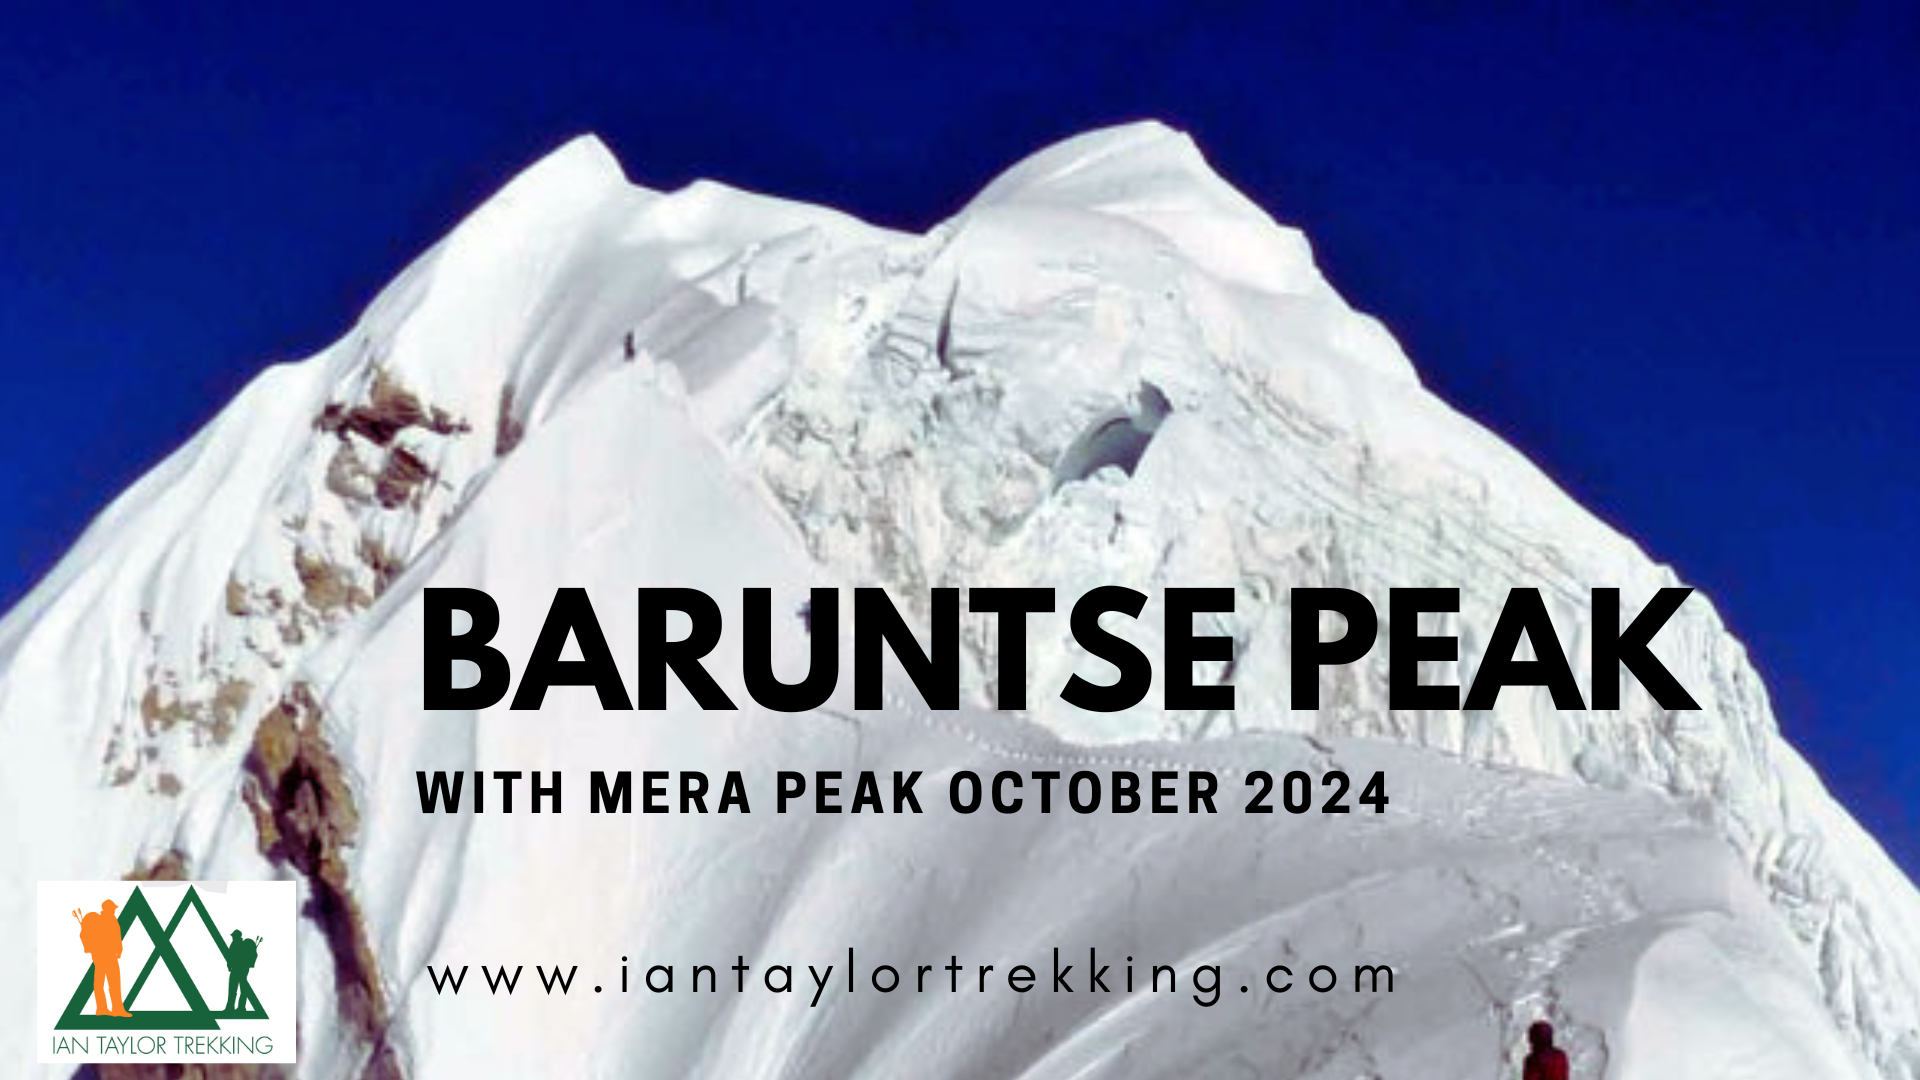 Top tips for Baruntse Peak